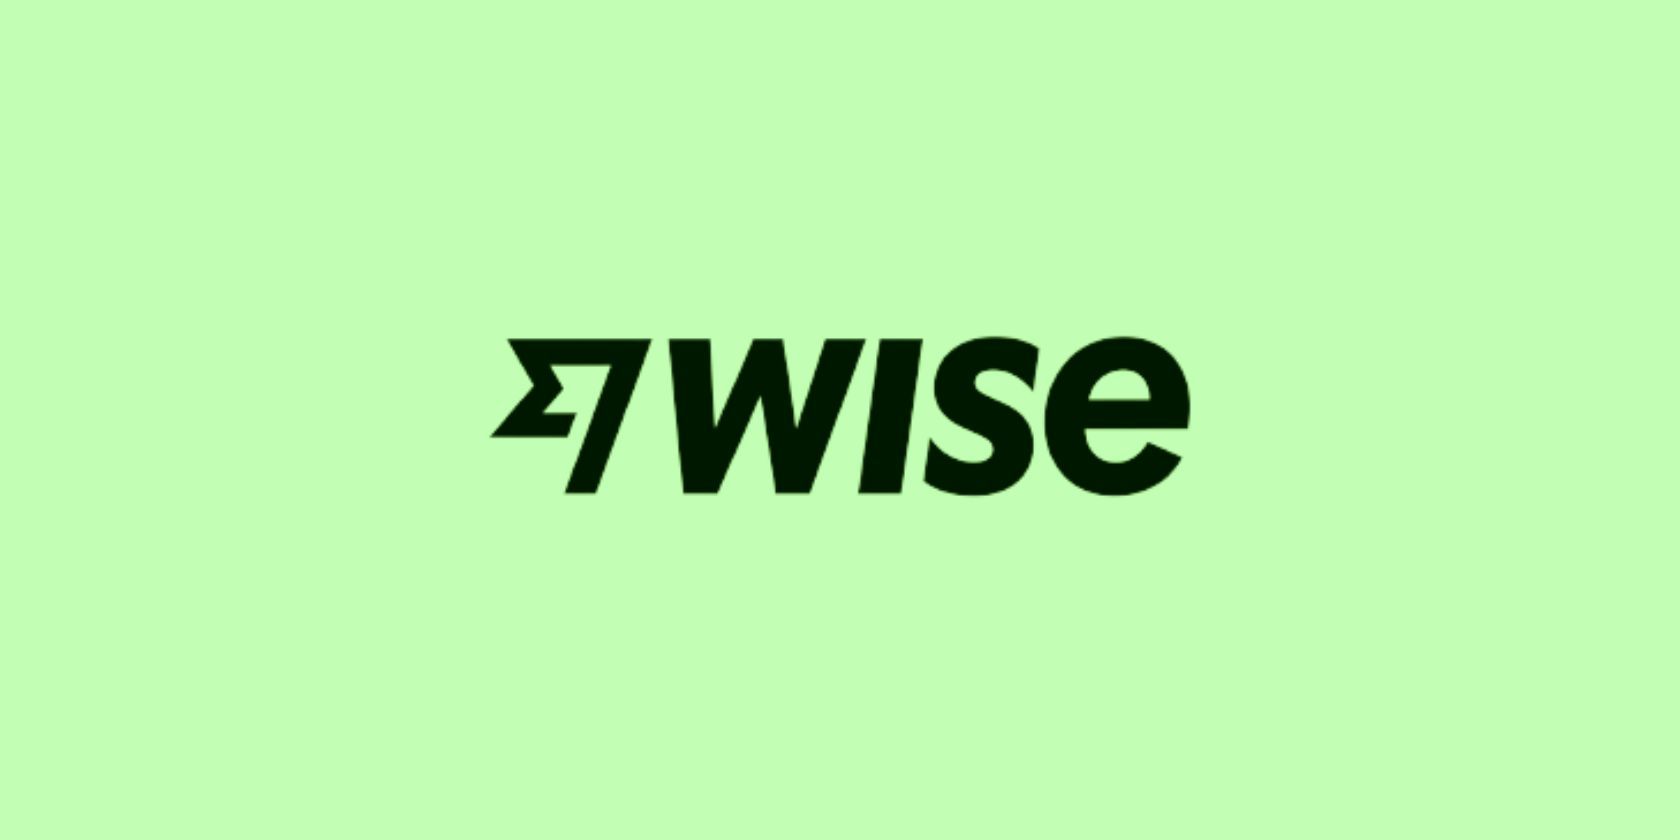 Wise logo seen on light green background